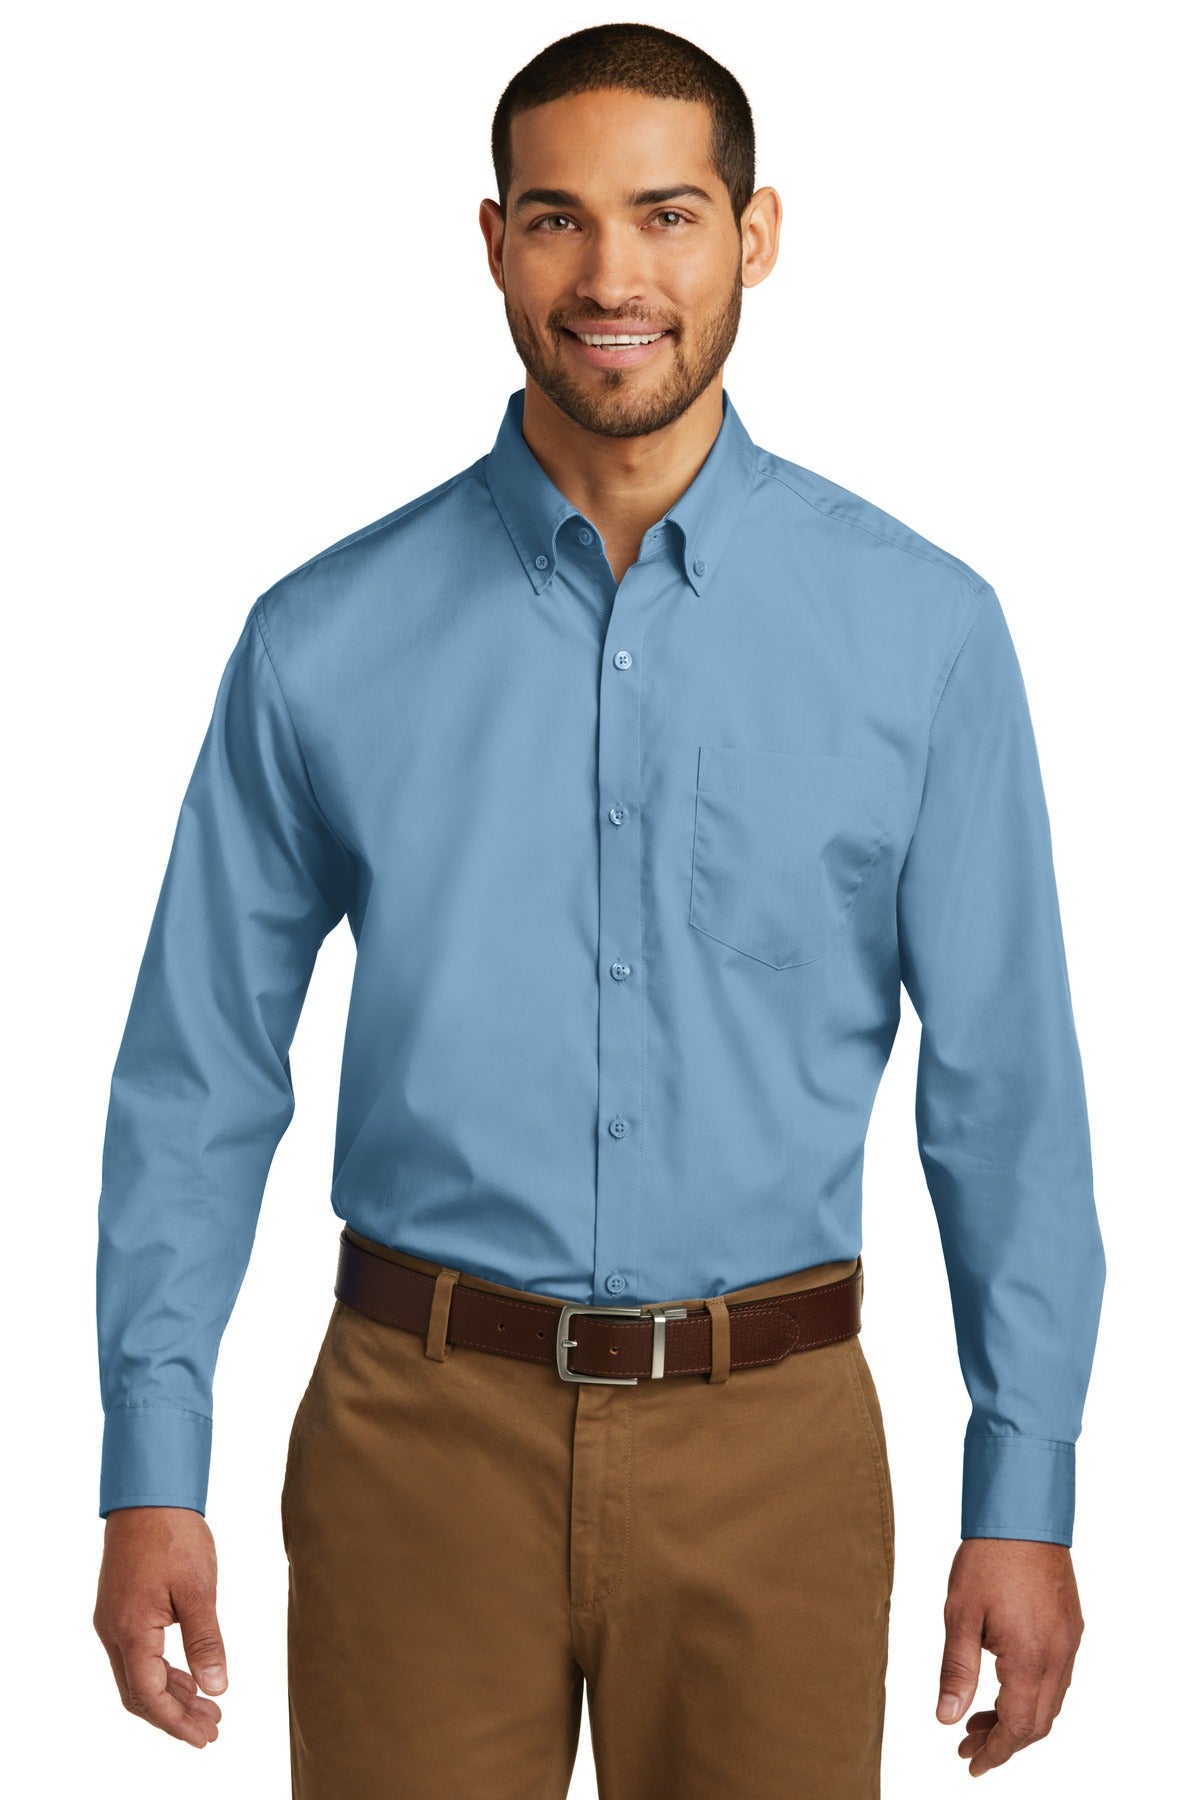 Port Authority® Long Sleeve Carefree Poplin Shirt. W100 [Carolina Blue] - DFW Impression